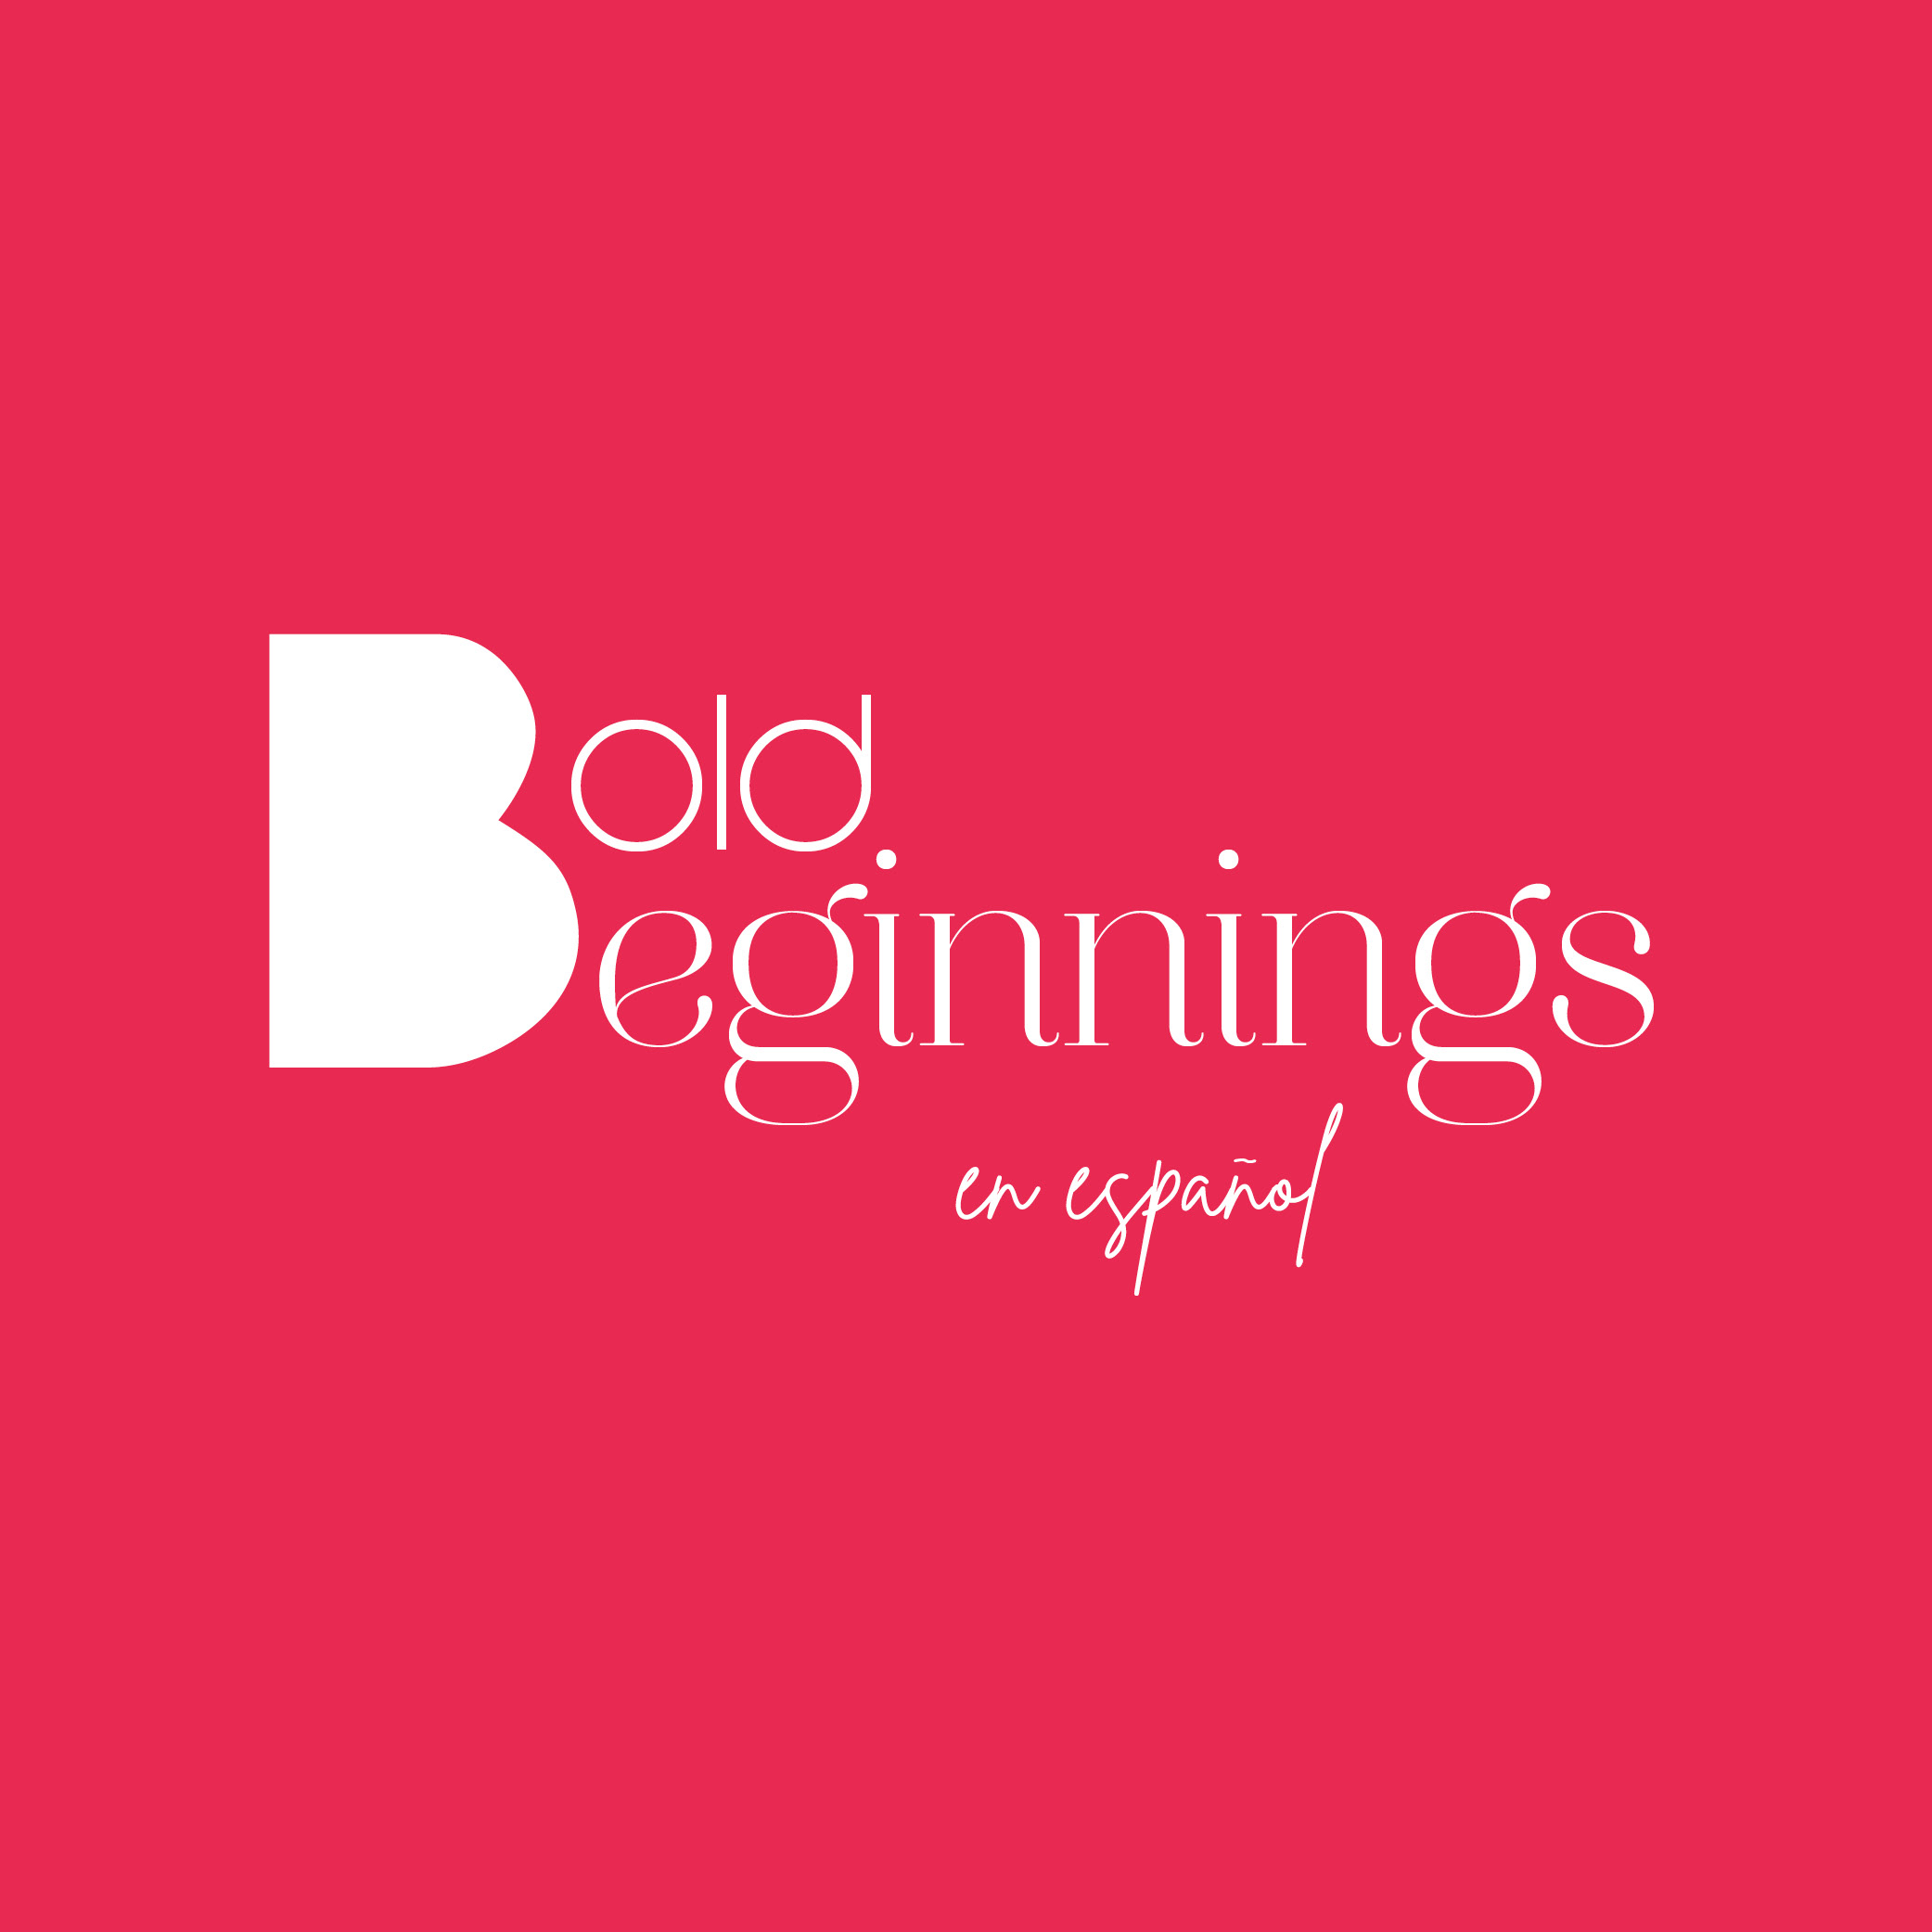 Bold Beginnings en español 